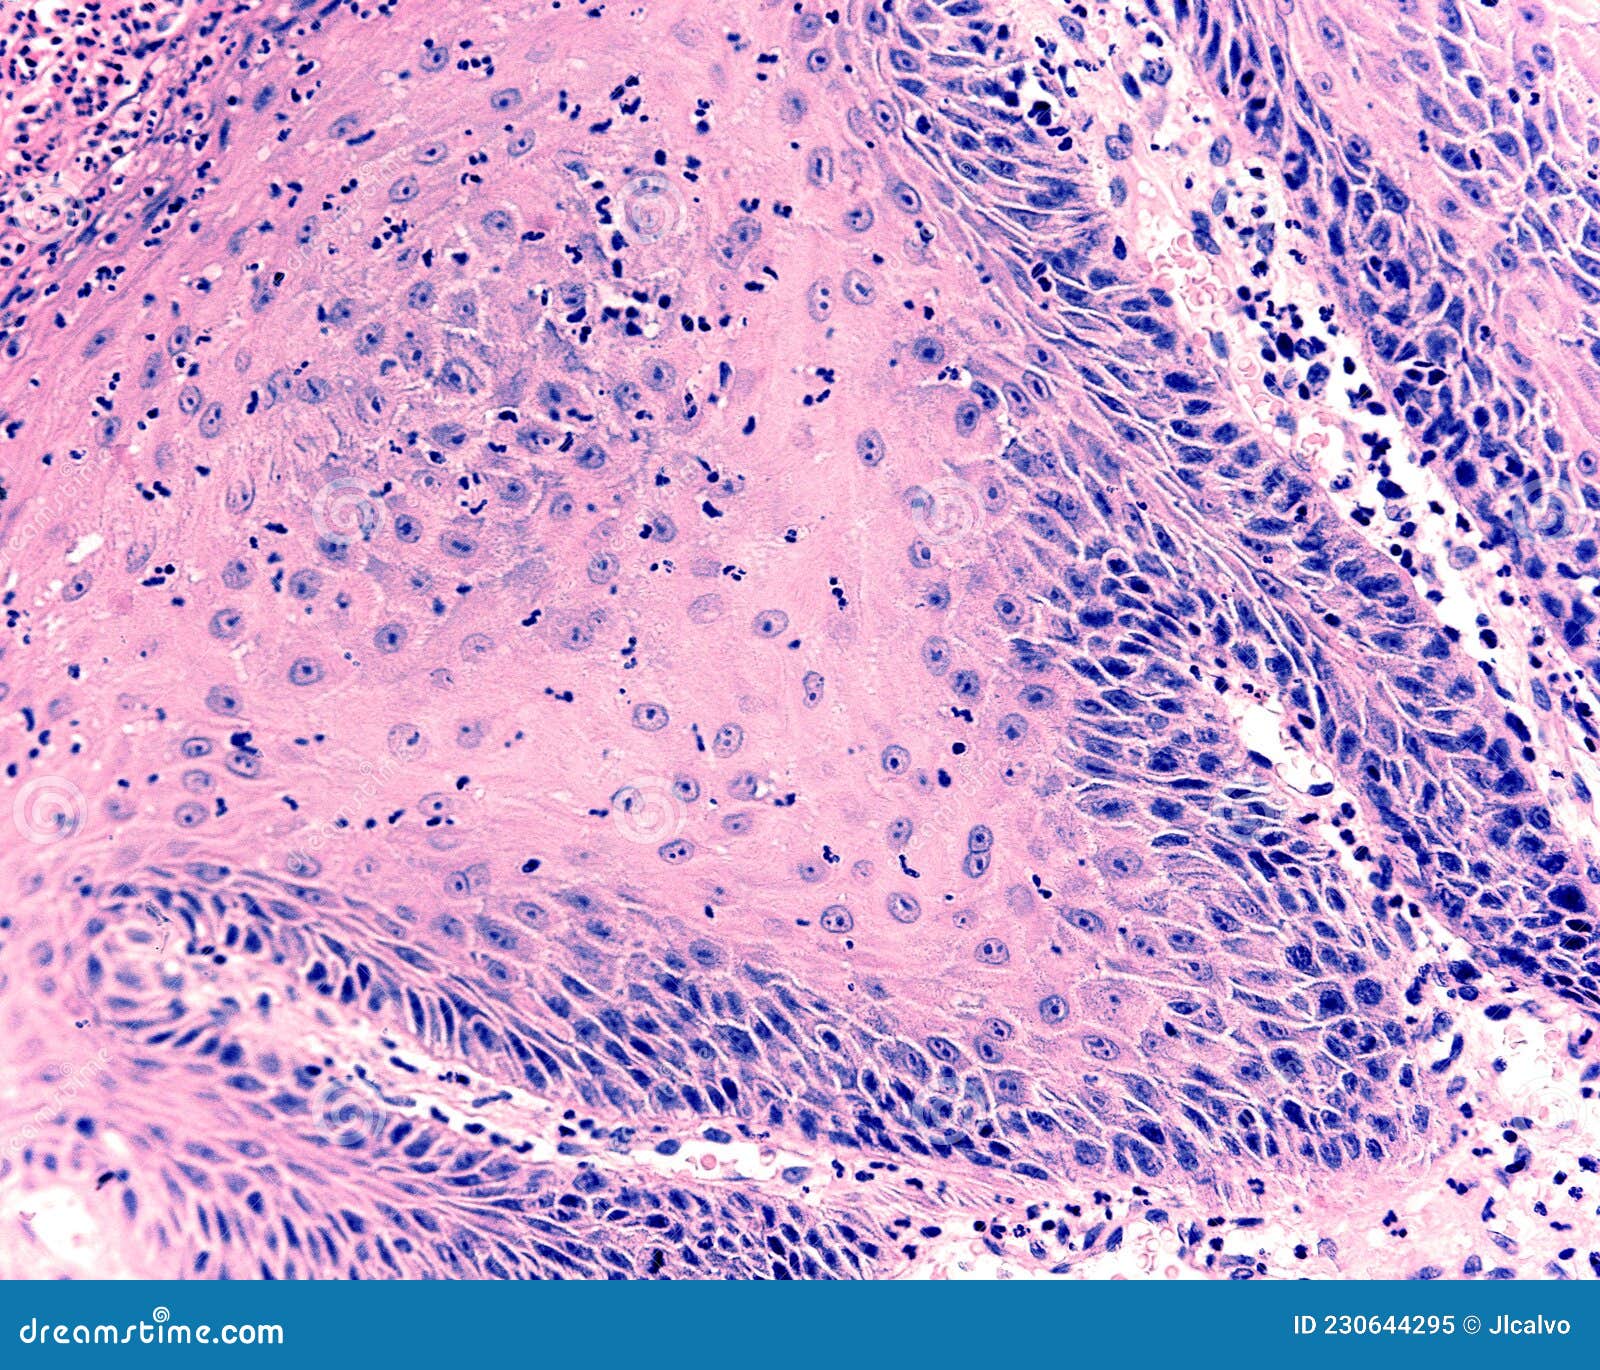 Papilloma del palato. Virus y cavidad oral: Virus del Papiloma Humano abdominal cancer discomfort